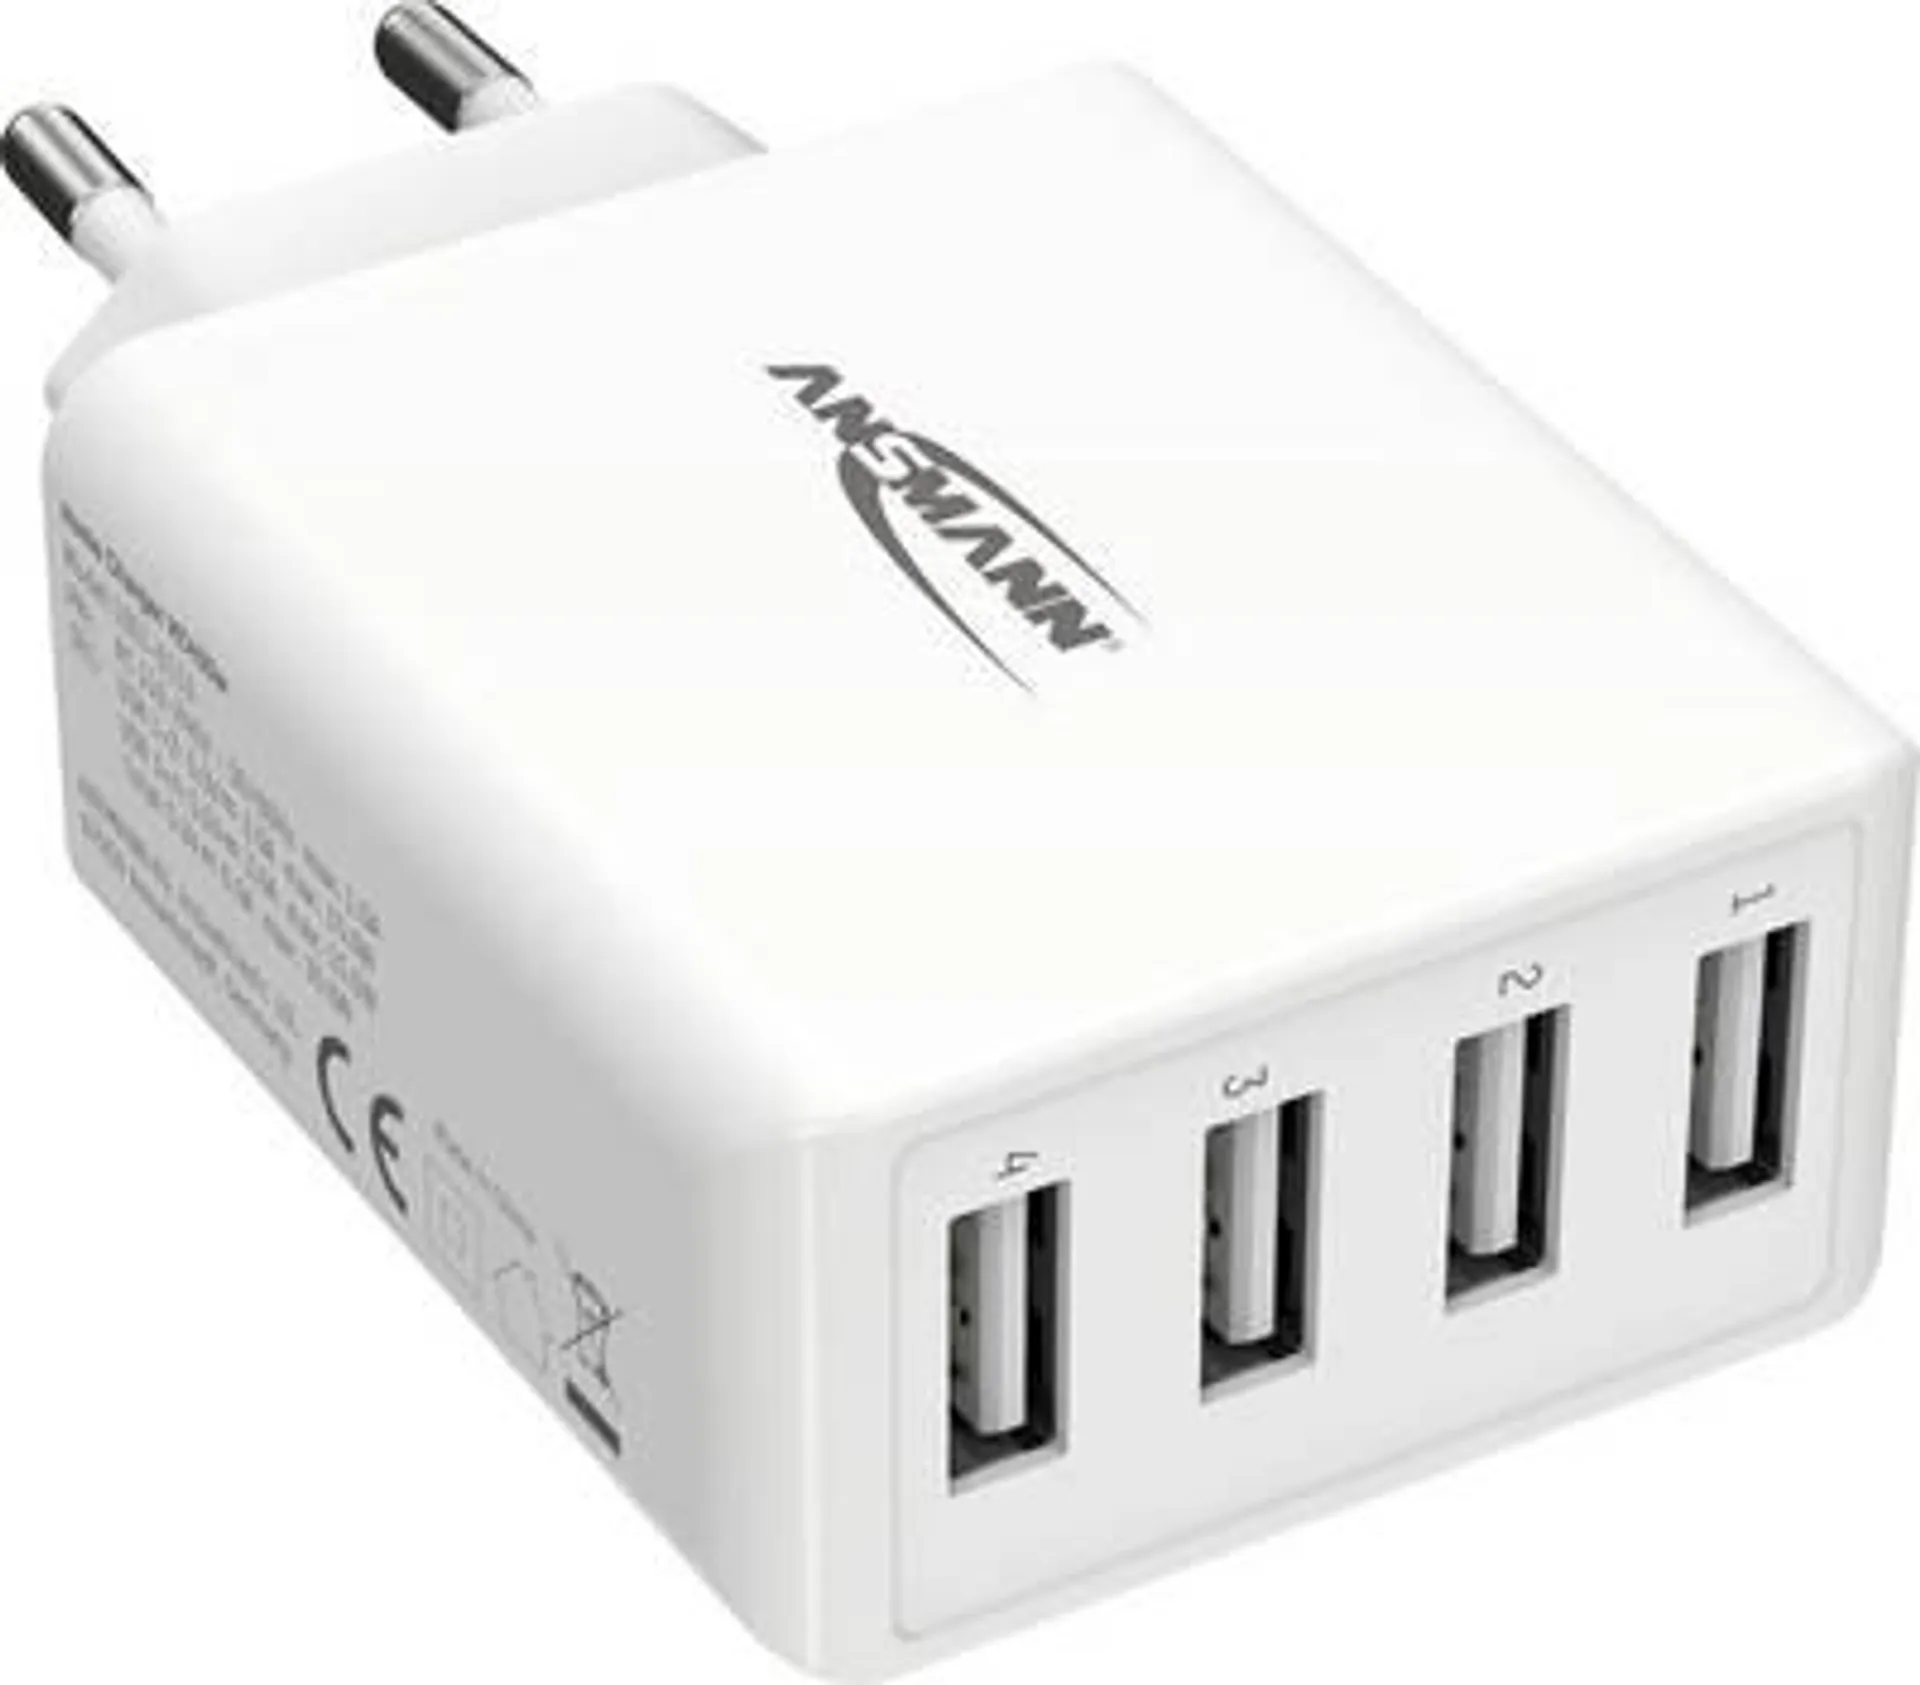 Ansmann HomeCharger HC430 1001-0113 USB charger Mains socket Max. output current 6000 mA 4 x USB 2.0 port A